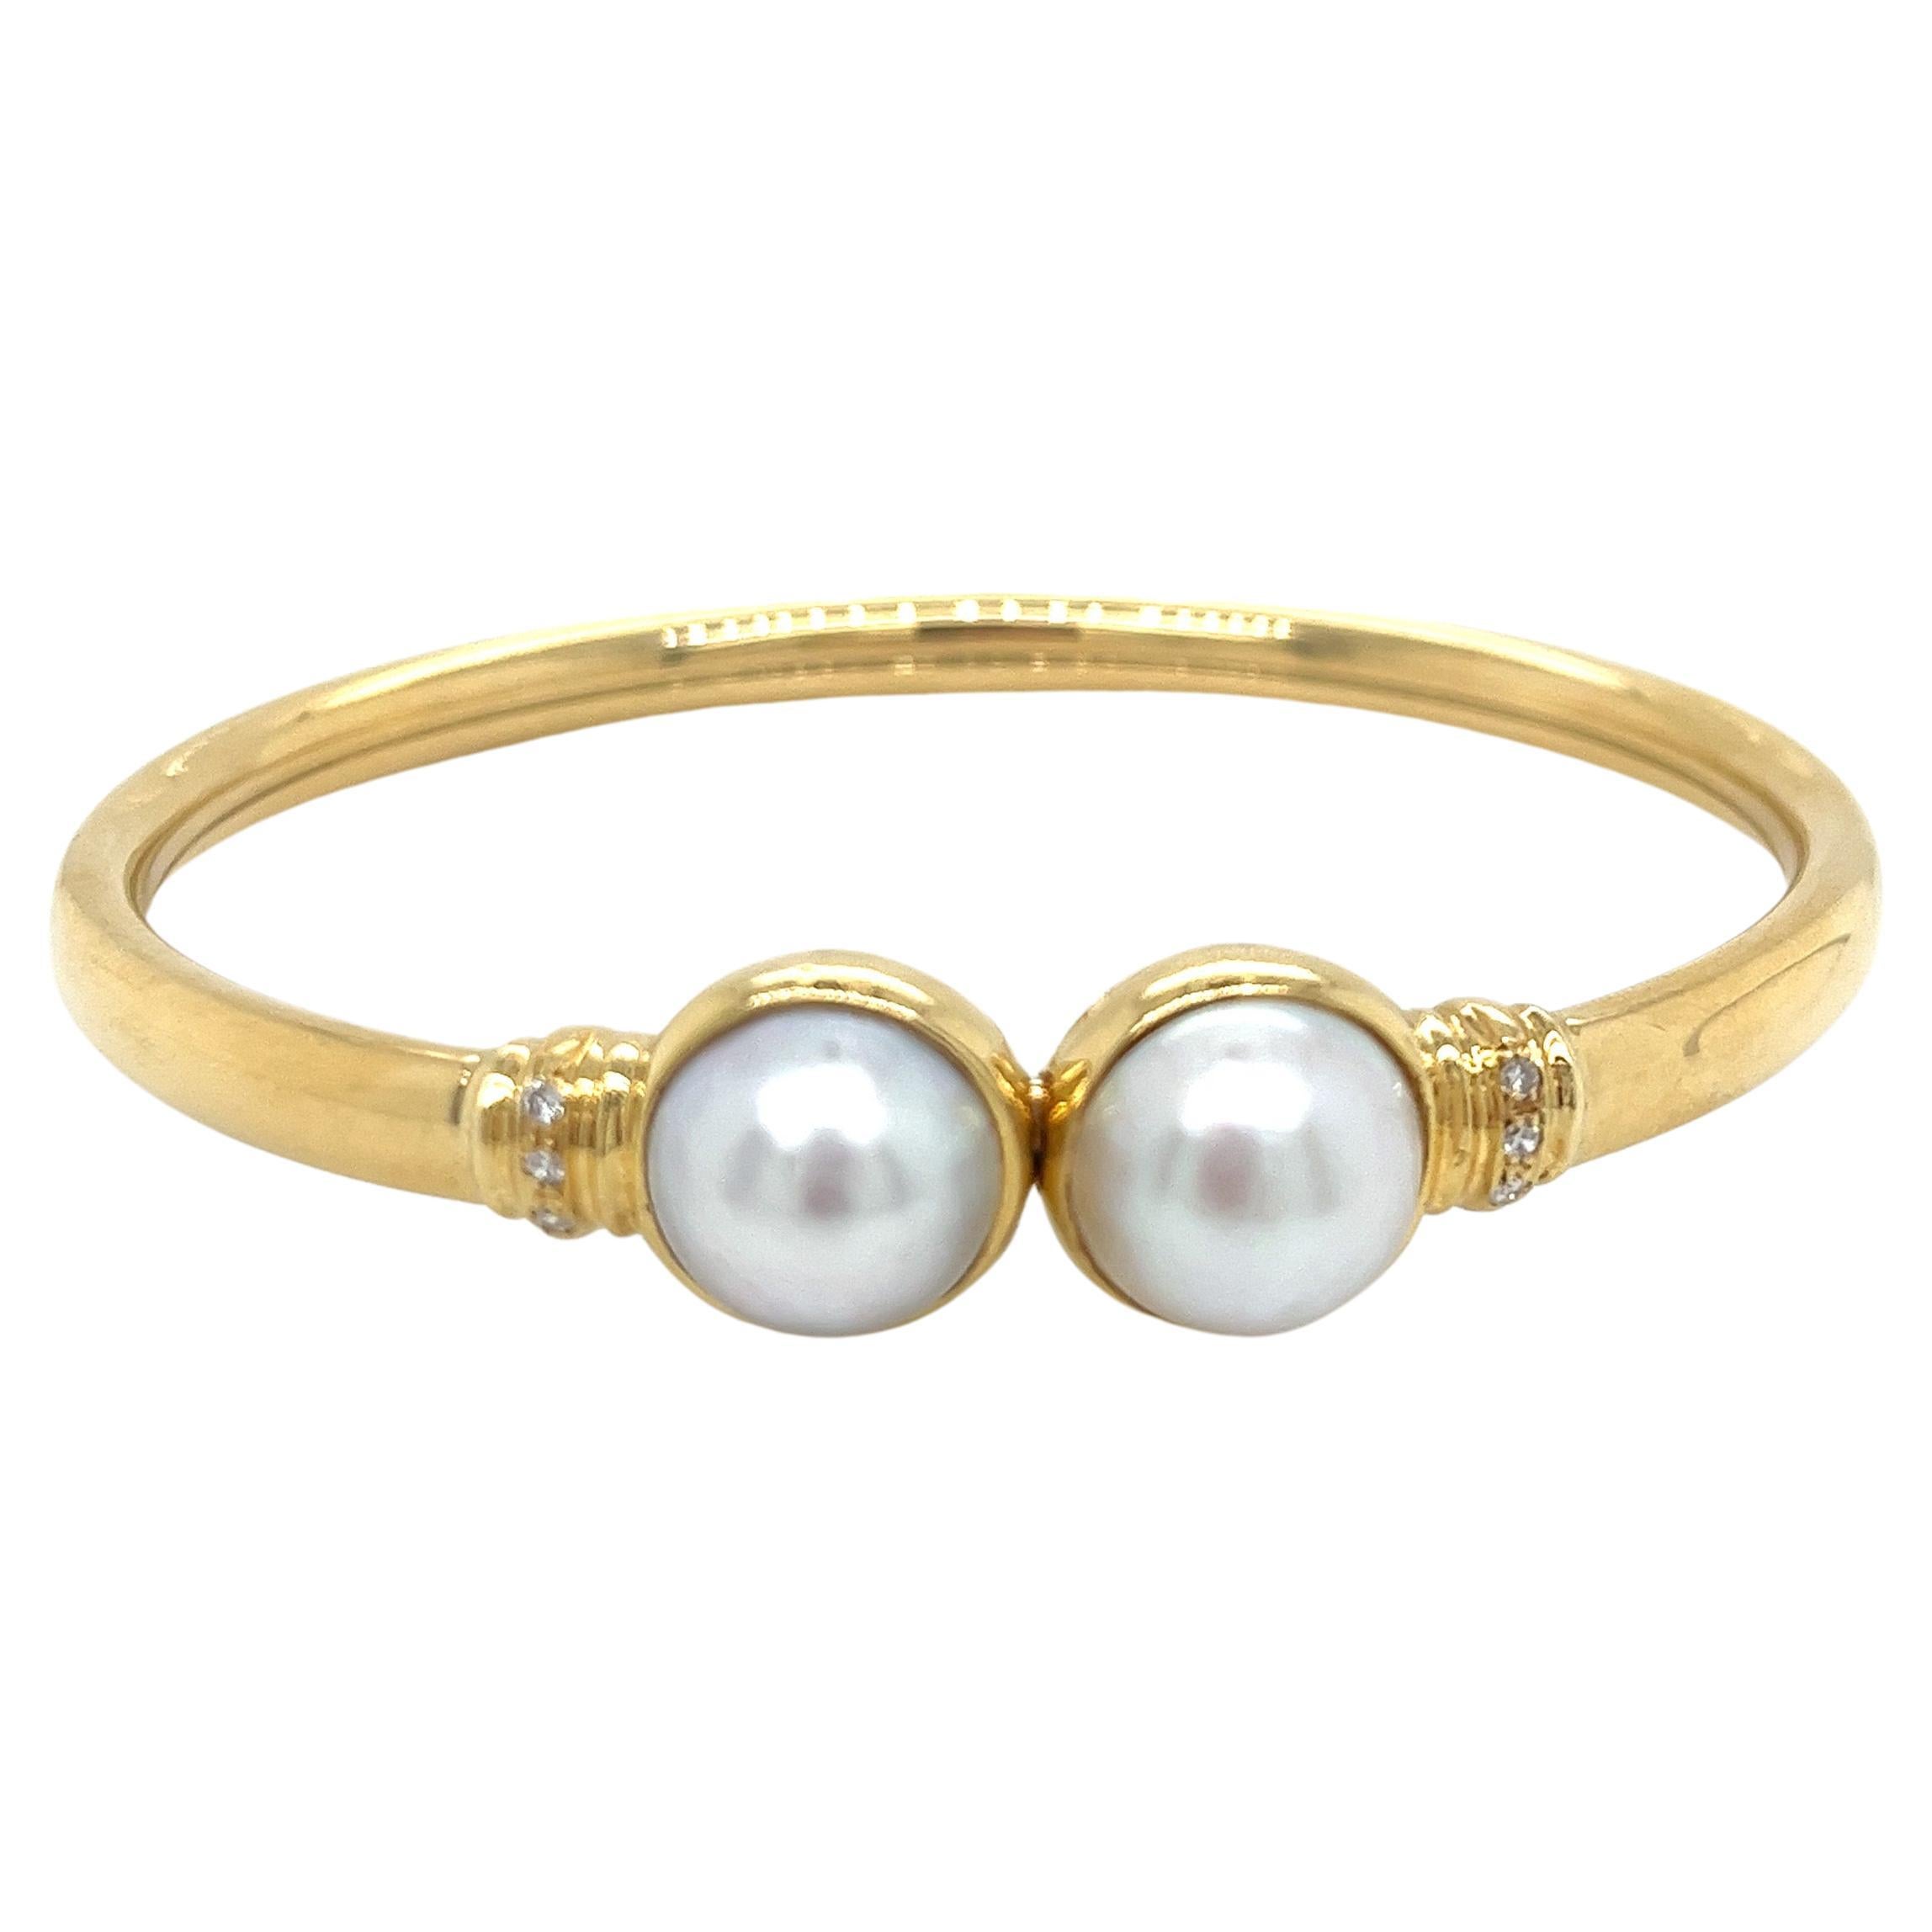 Vintage 18k Yellow Gold Mabe Pearl and Diamond Bangle Bracelet